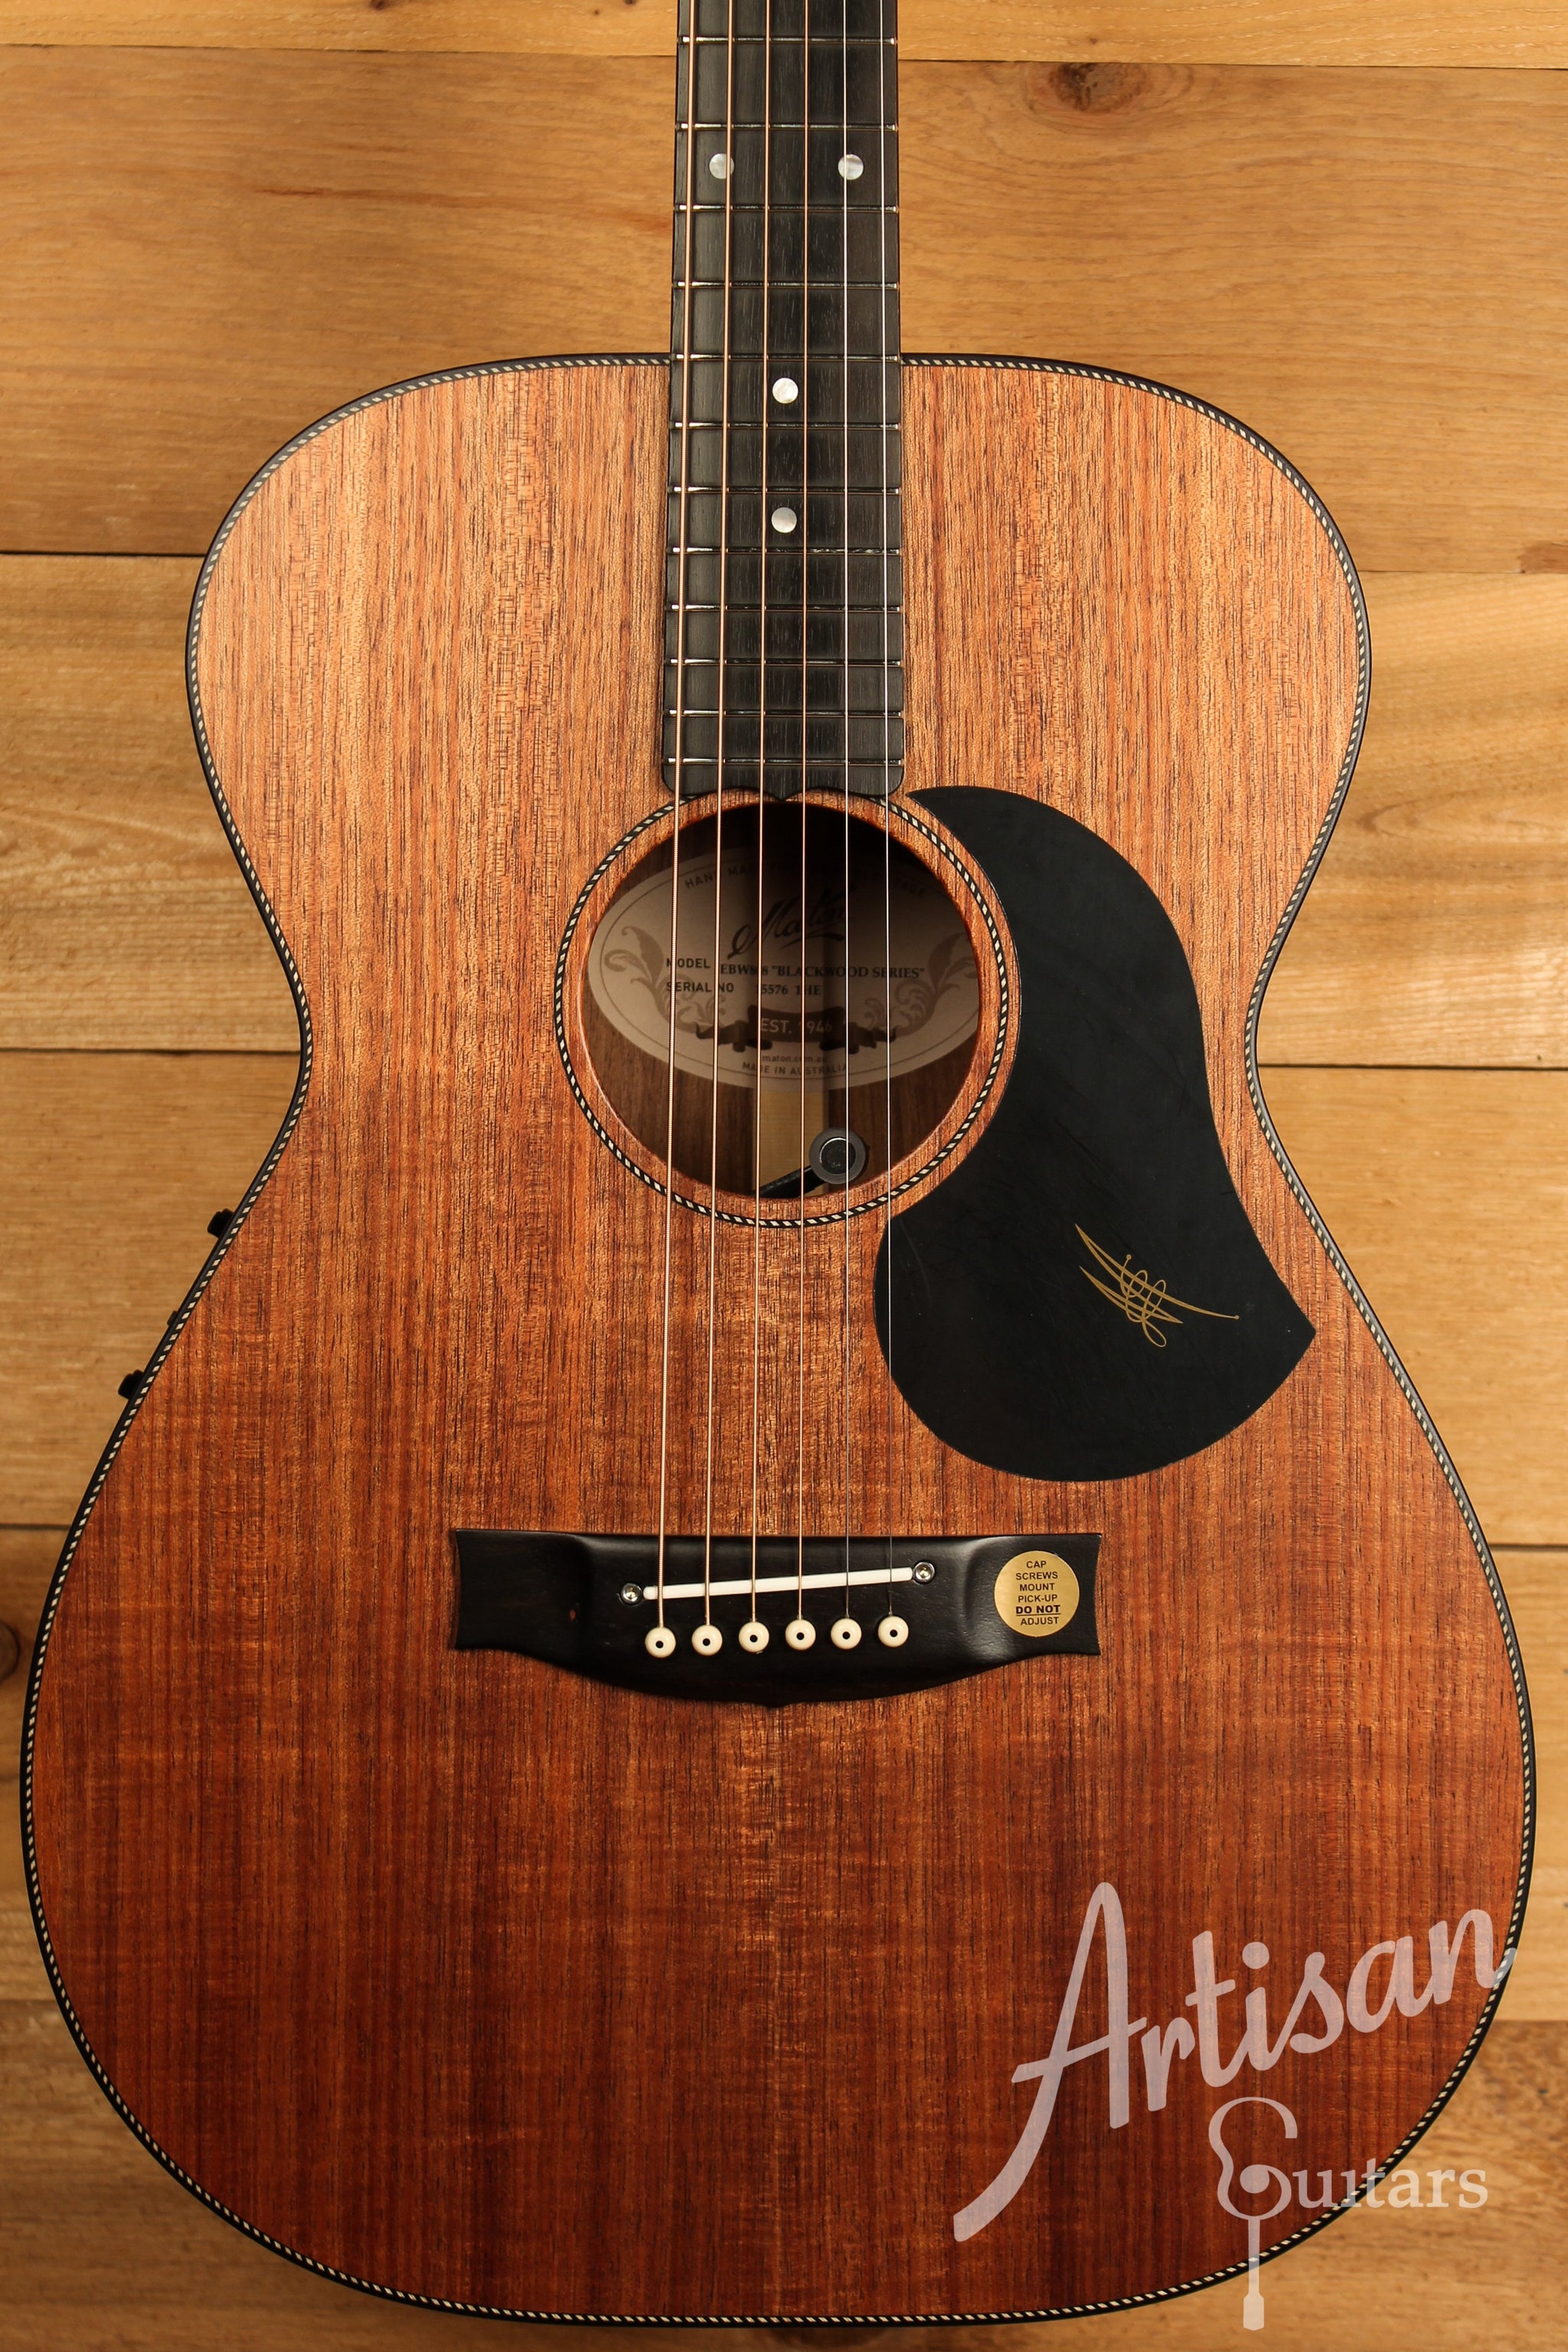 Maton EBW808 Guitar w/ Blackwood Top, Back & Sides w/ AP5 Pro Pickup System ID-12375 - Artisan Guitars